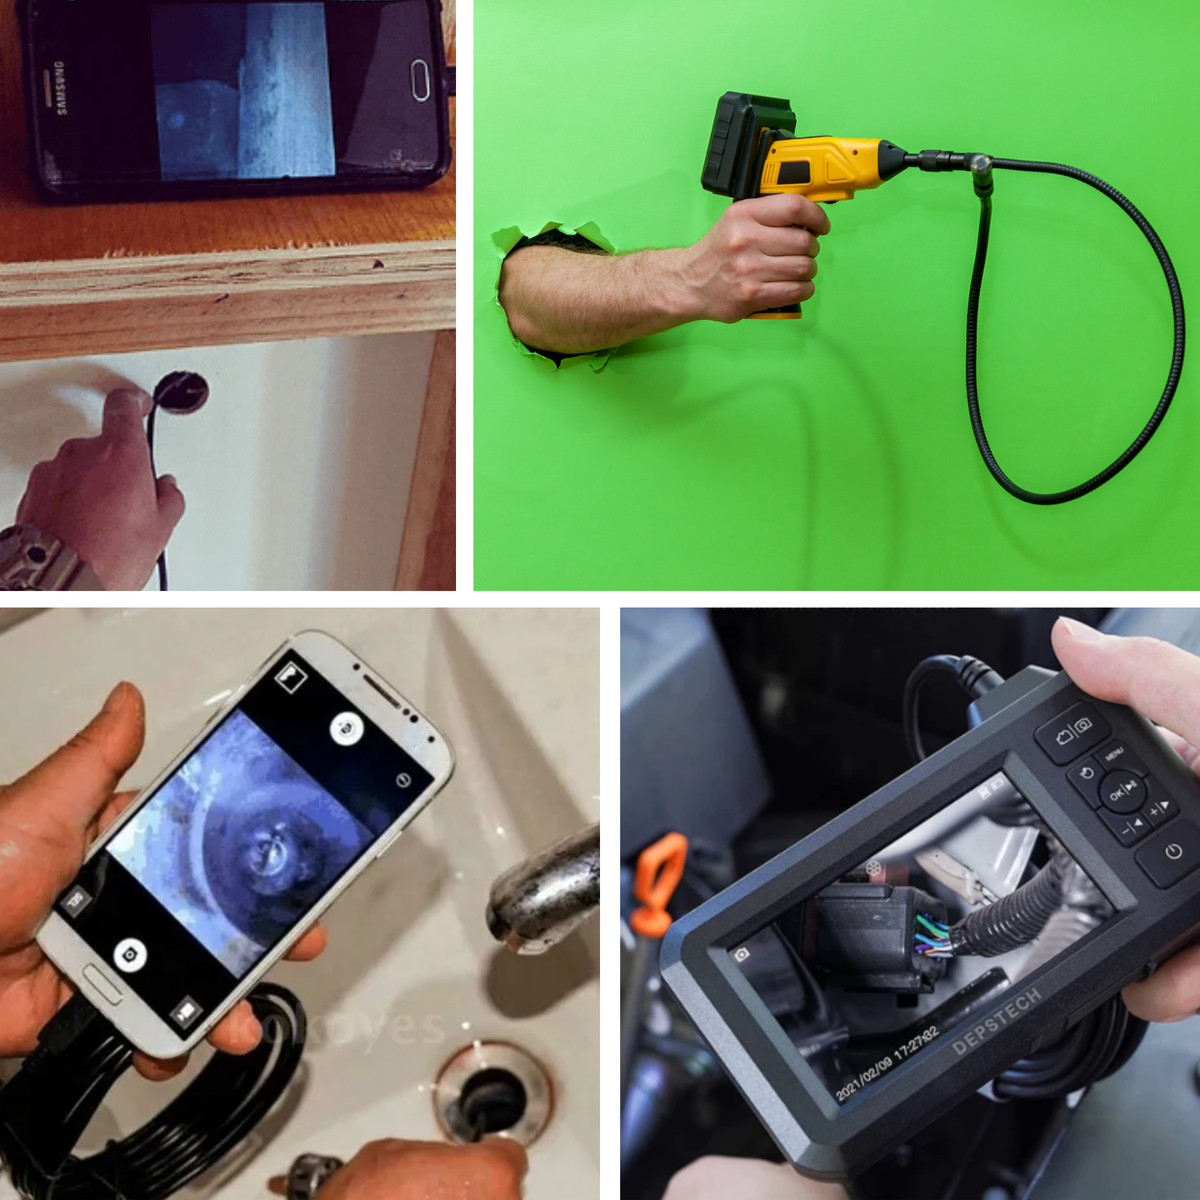 Wireless endoscope camera, inspection camera, using wireless inspection camera to see down sink pipe and car engine